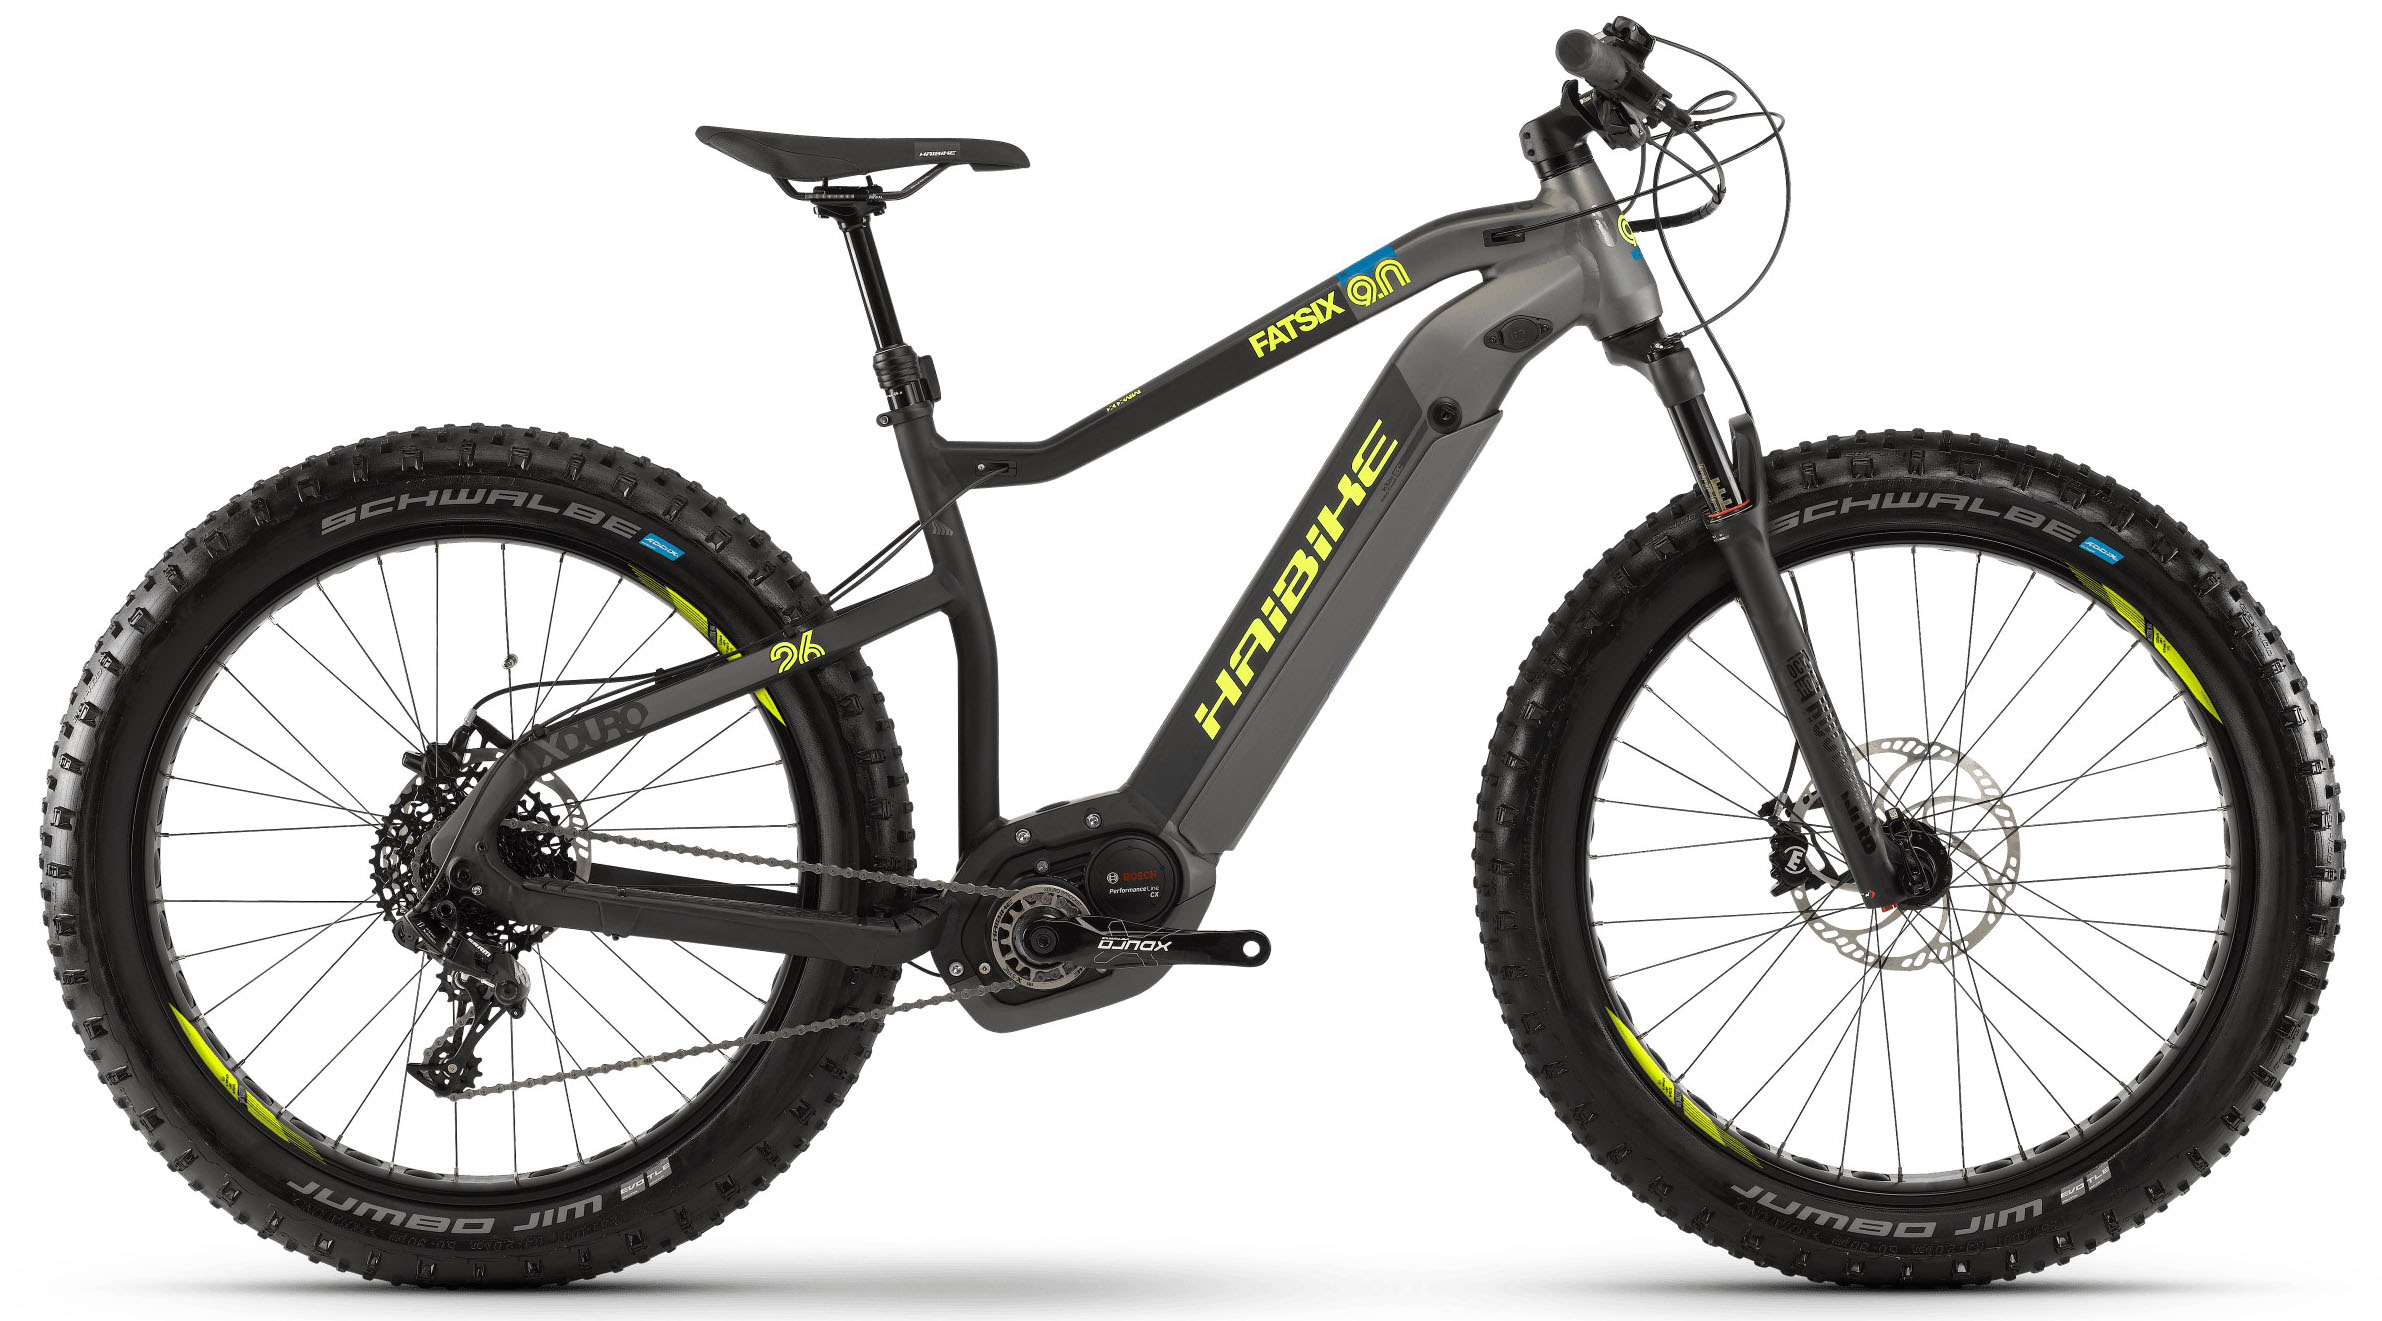  Отзывы о Электровелосипеде Haibike XDURO FatSix 9.0 i500Wh 11-G NX 2019